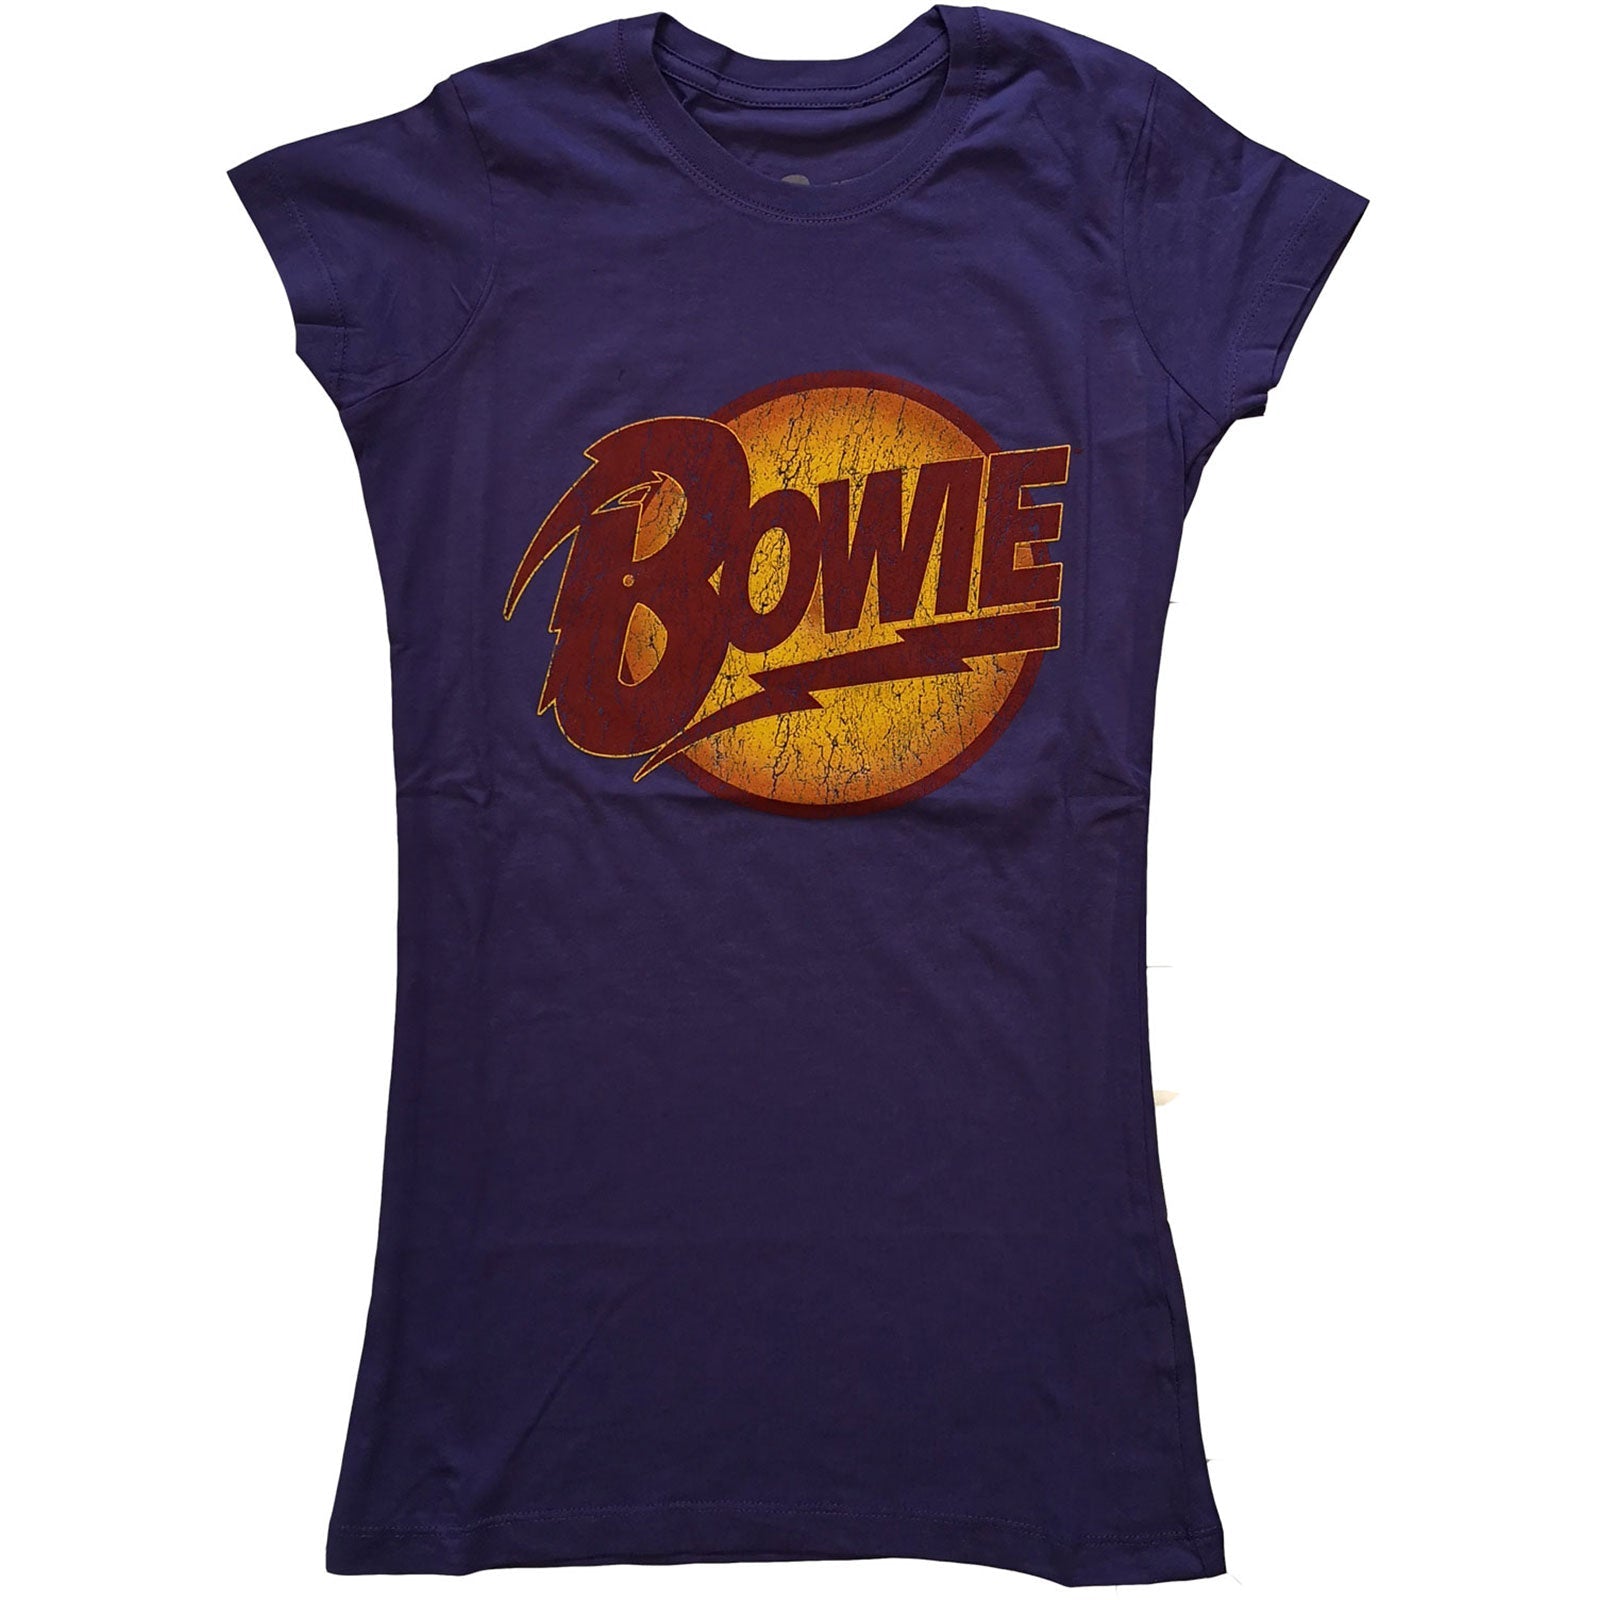 David Bowie Ladyfit T-Shirt - Vintage Diamond Dogs Logo Purple - Official Licensed Design - Jelly Frog